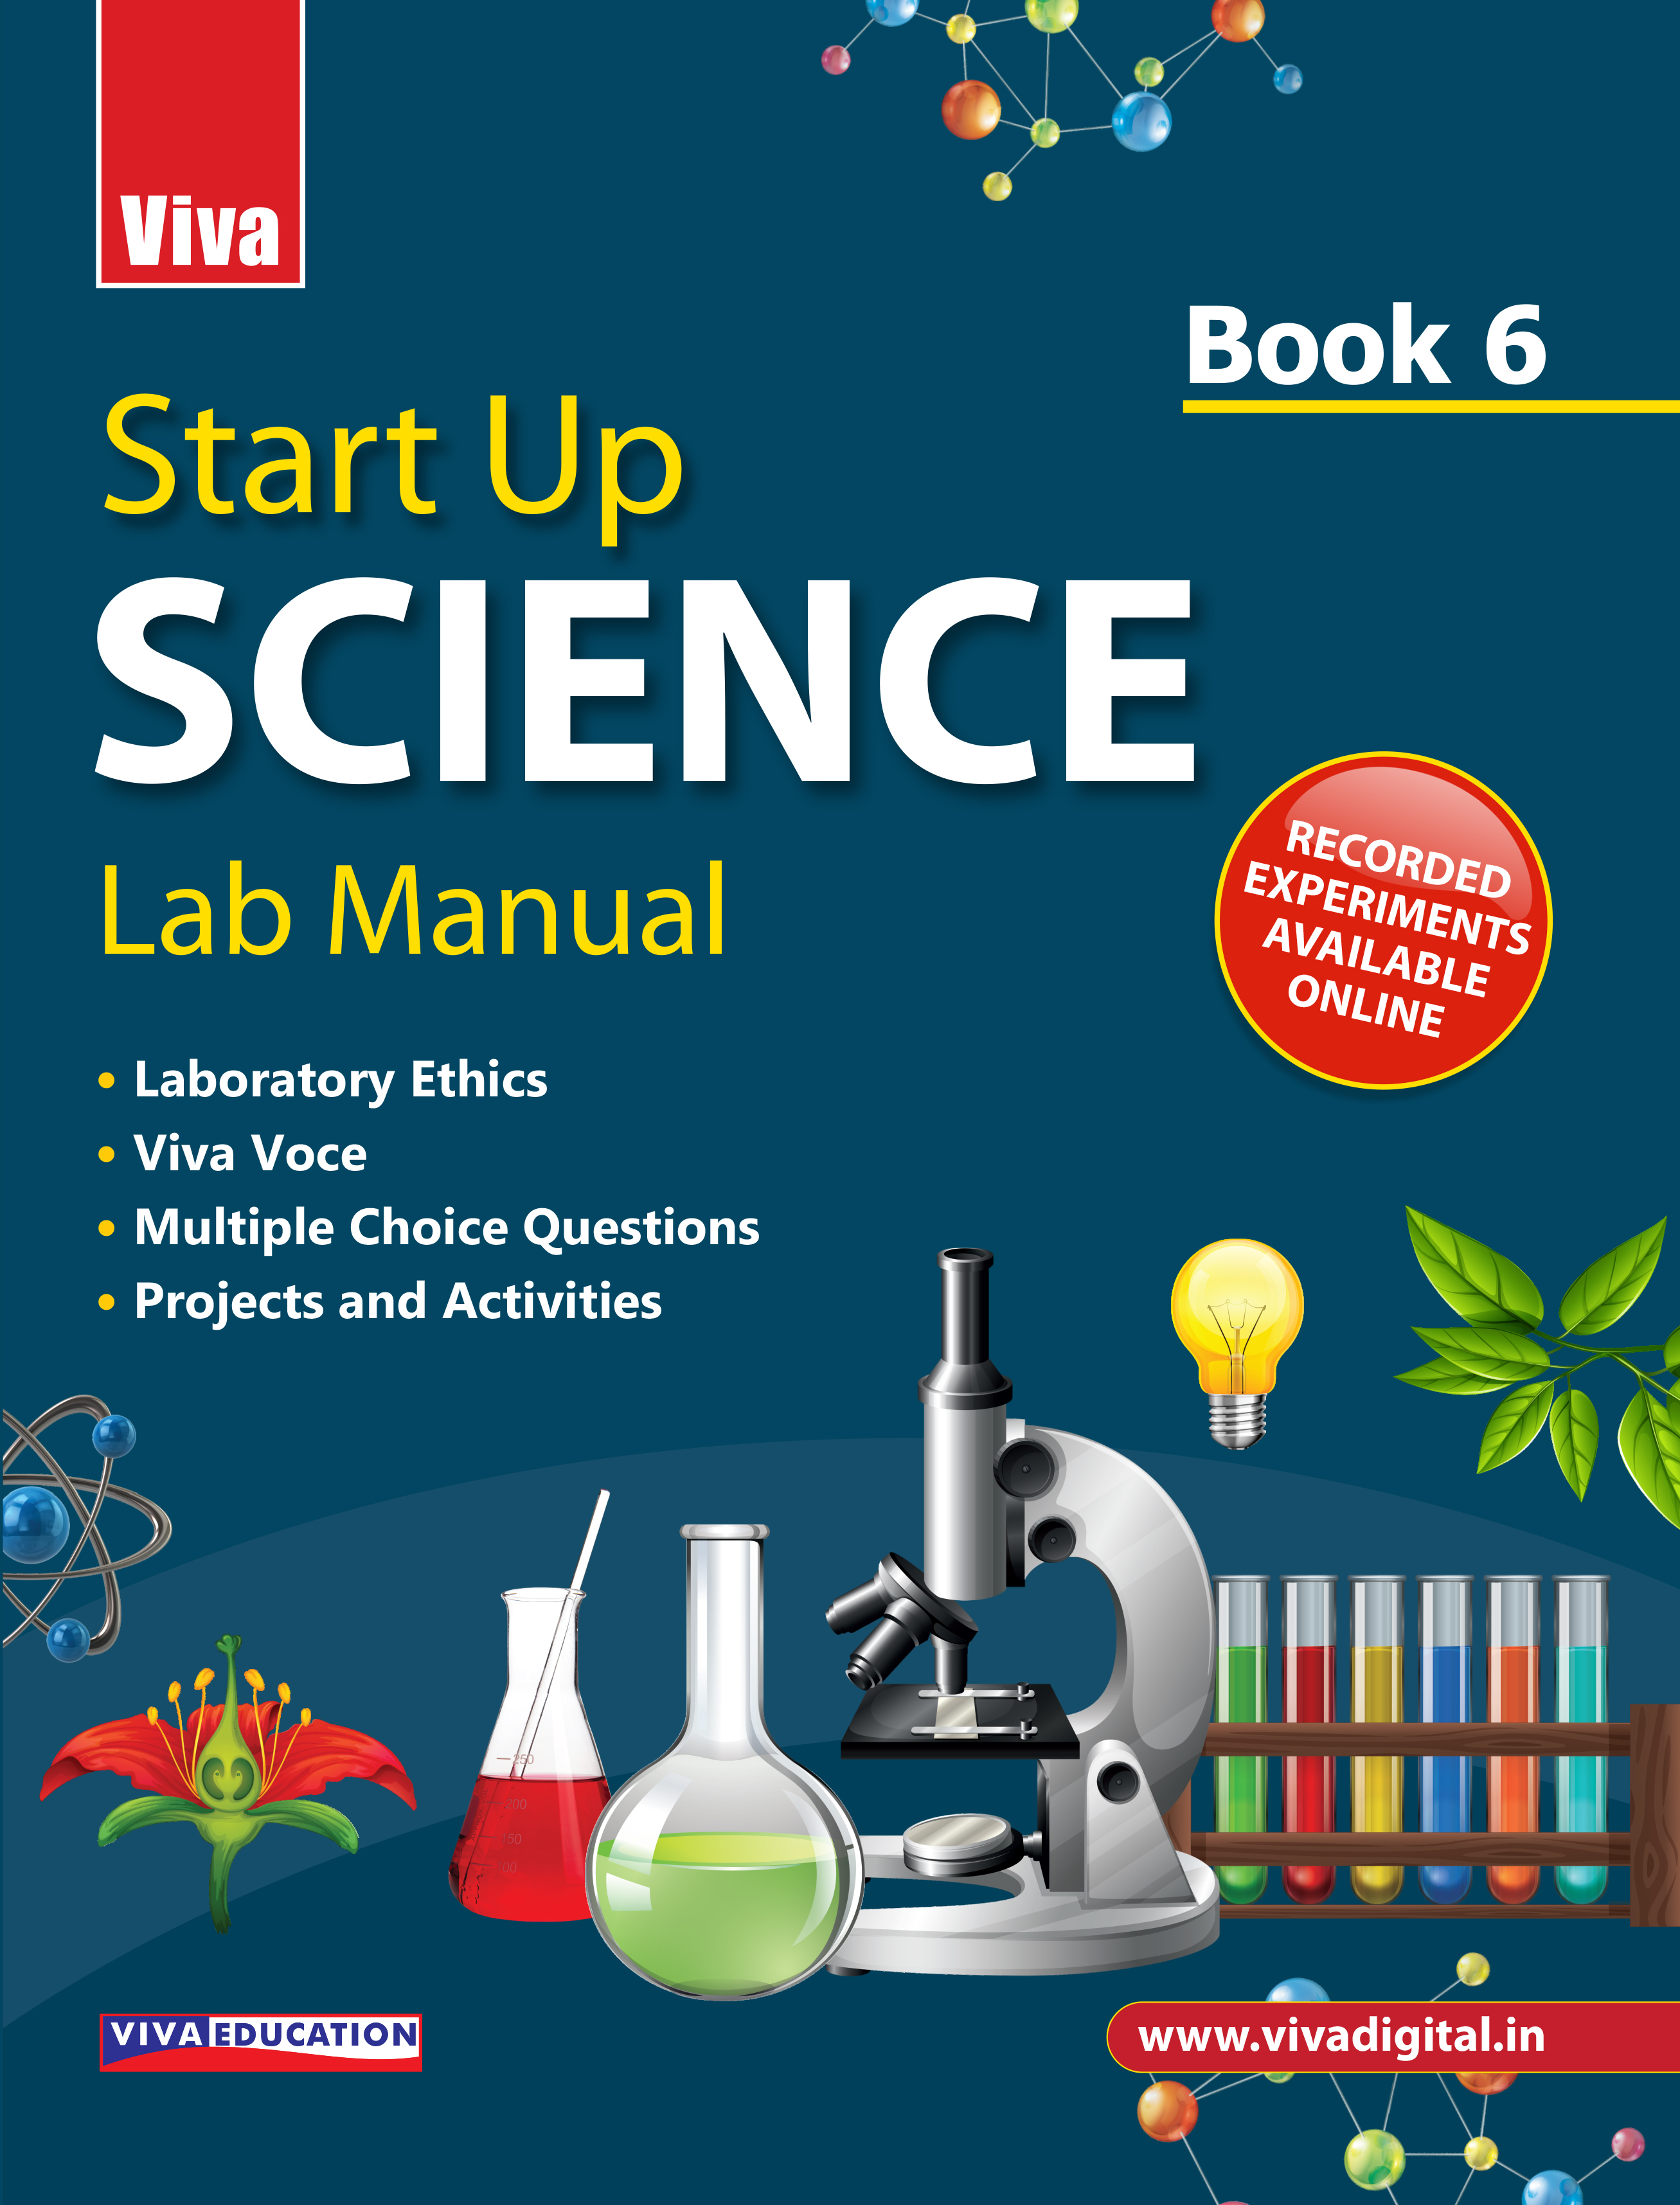 Start Up Science Lab Manual - 6